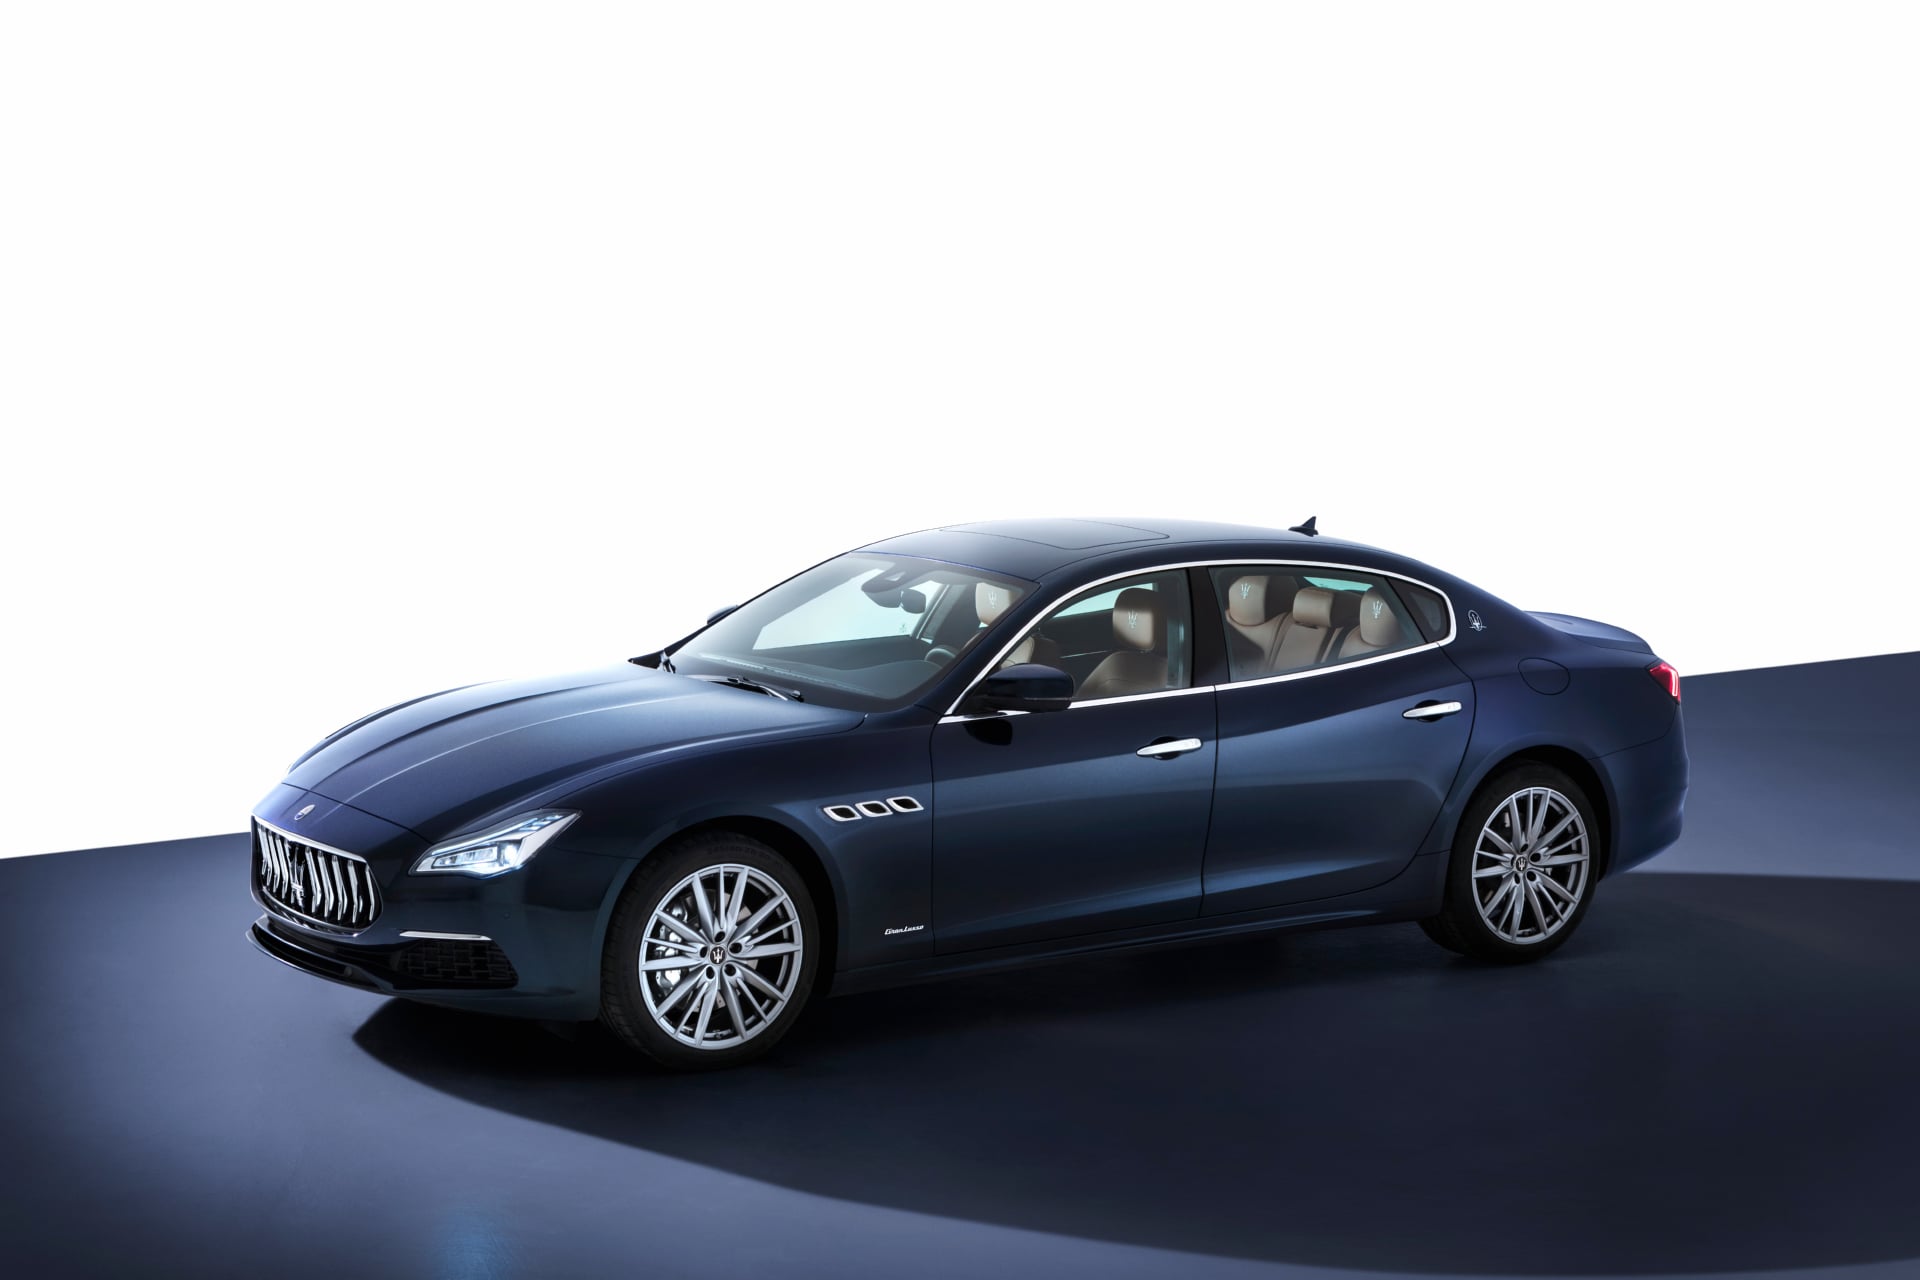 Maserati Quattroporte S Q4 GranLusso at 2048 x 2048 iPad size wallpapers HD quality